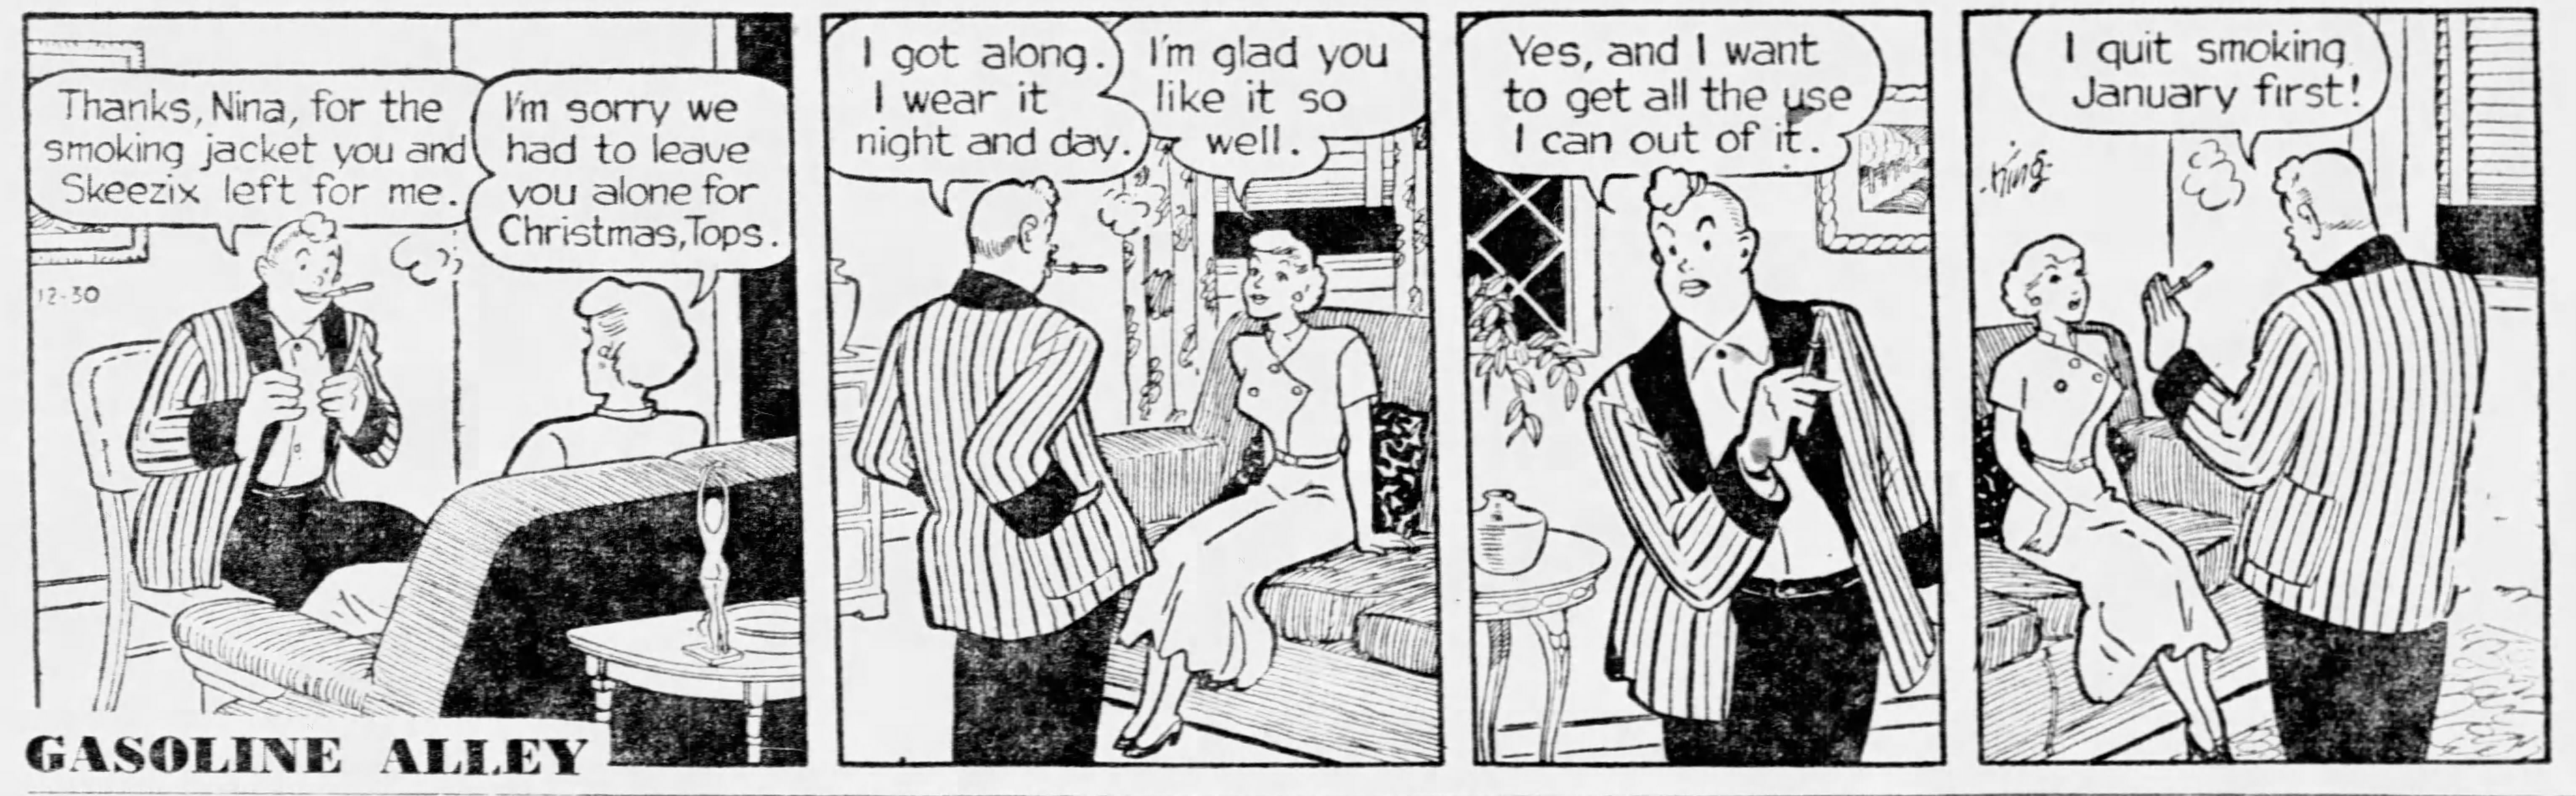 Gasoline Alley, December 30, 1952